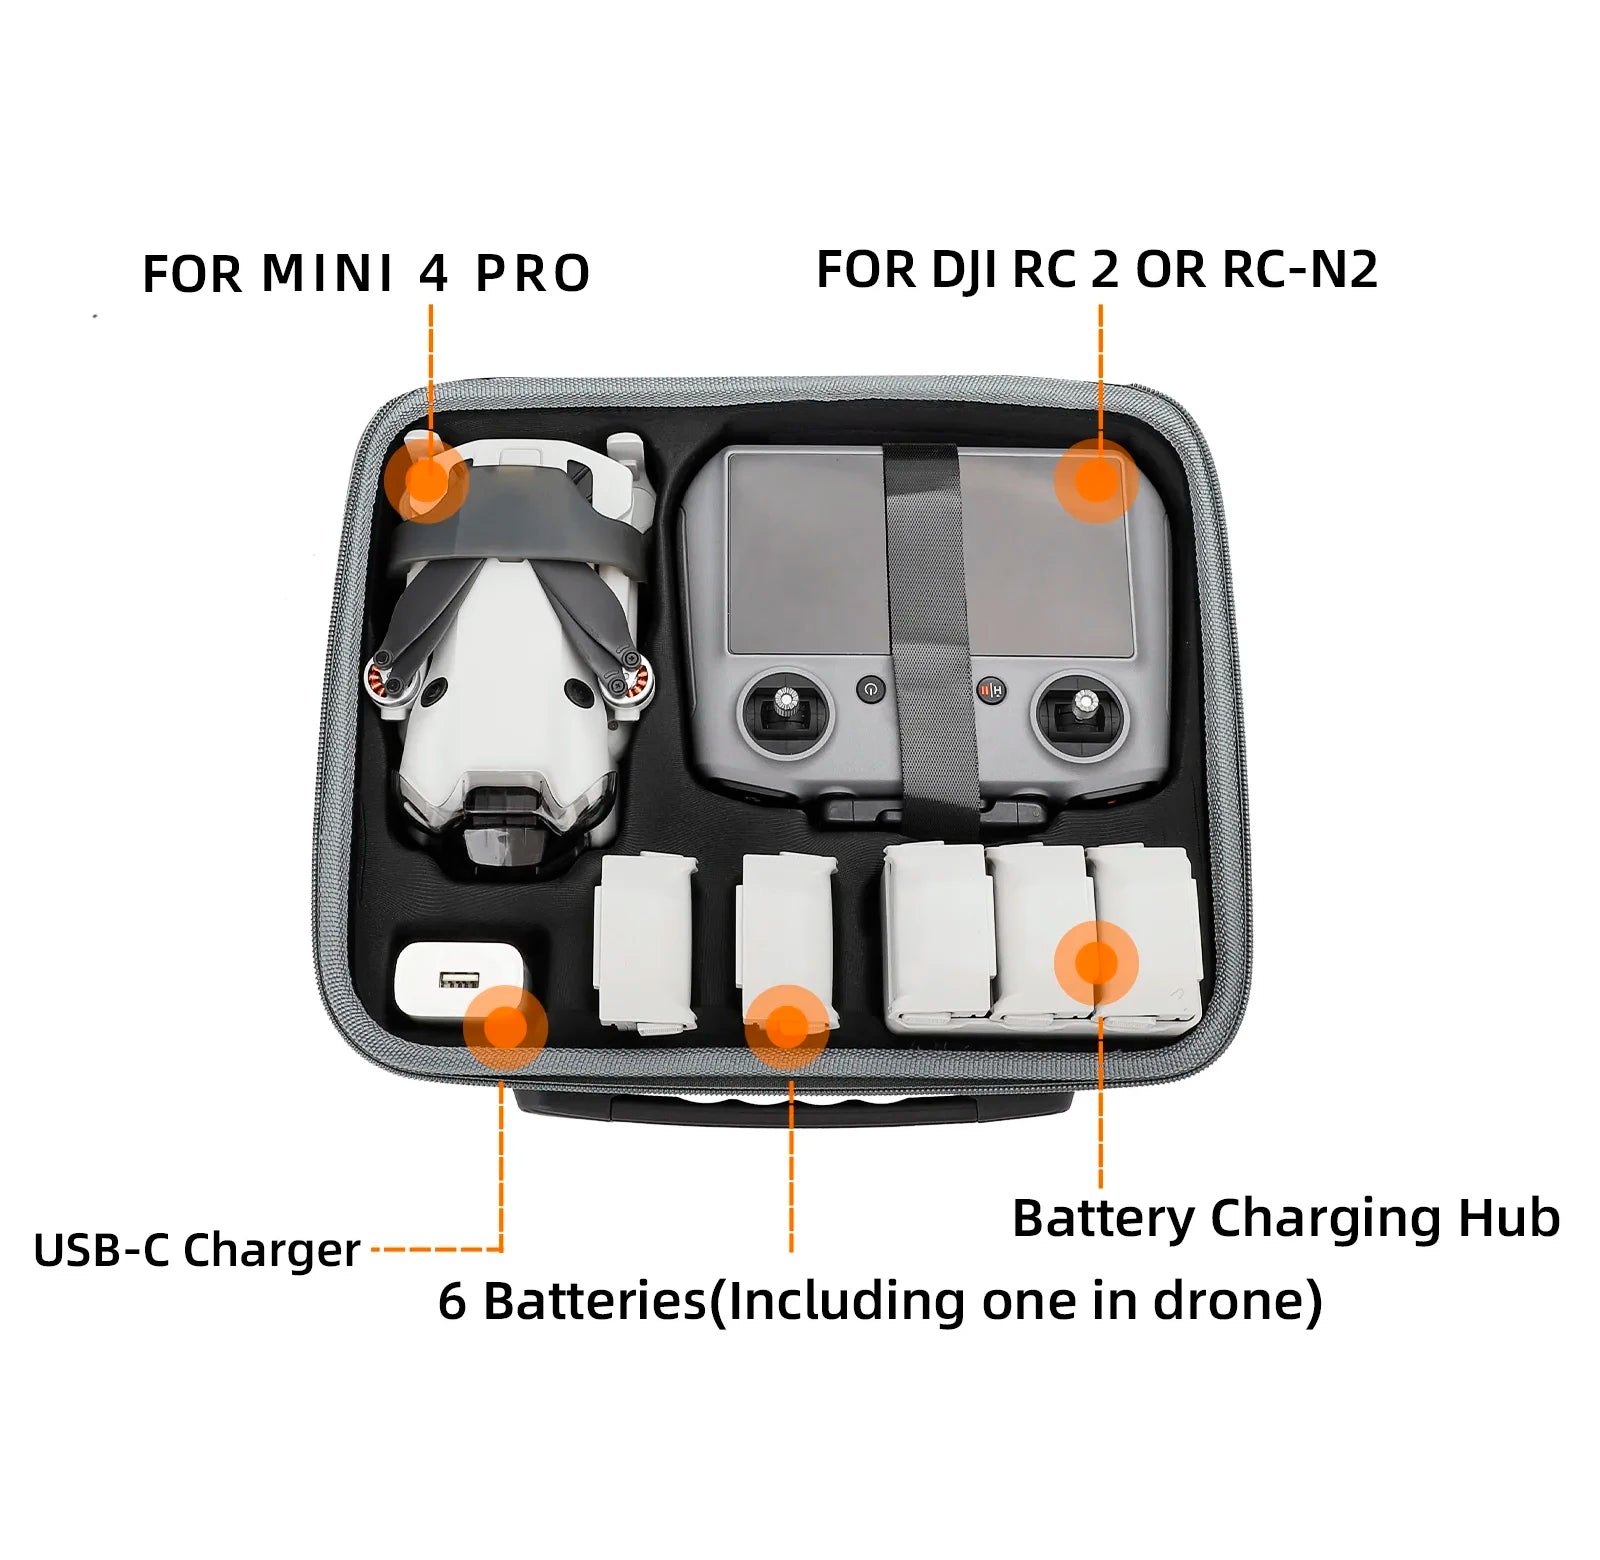 Portable Carrying Case For DJI Mini 4 Pro, Handbag Storage Bag For DJI RC